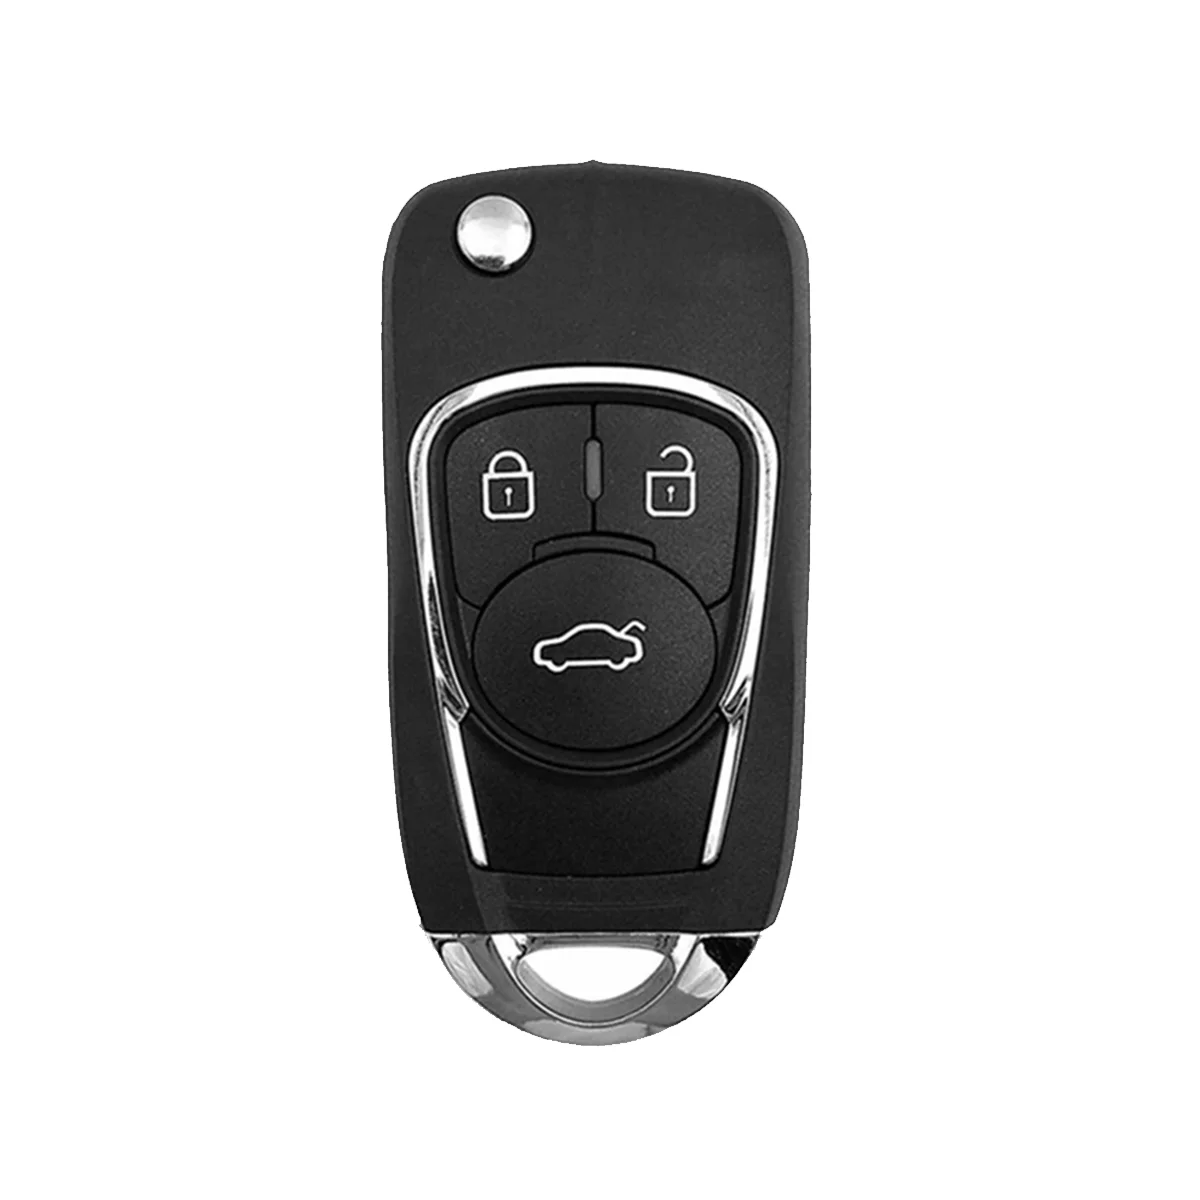 

KEYDIY B22-3 KD Remote Control Car Key Universal 3 Button for GM Style for KD900/KD-X2 KD MINI/ URG200 Programmer